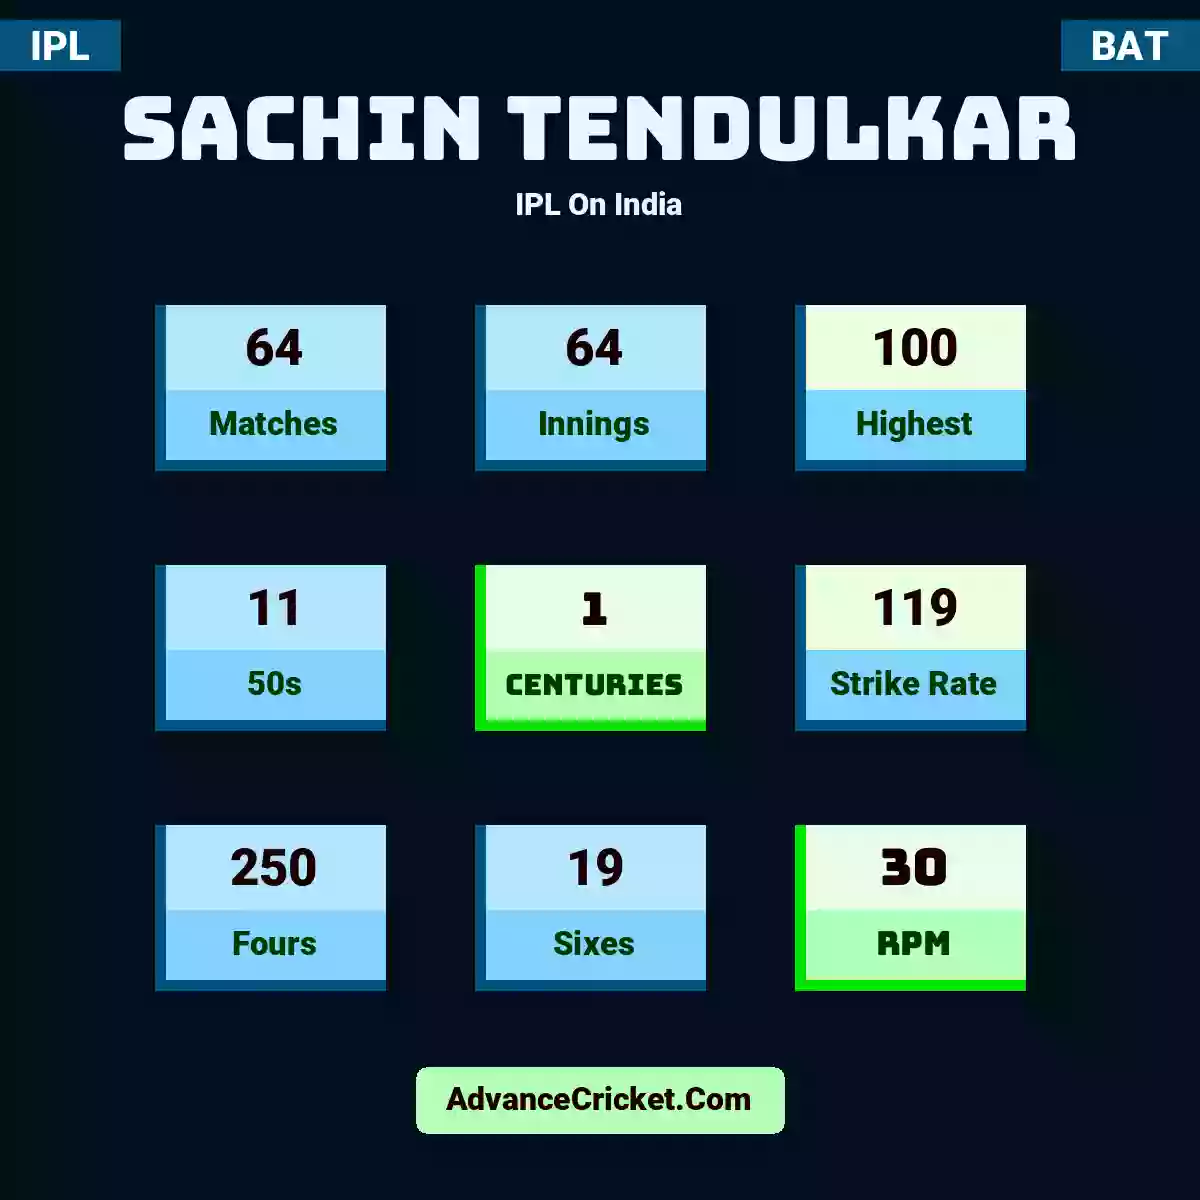 Sachin Tendulkar IPL  On India, Sachin Tendulkar played 64 matches, scored 100 runs as highest, 11 half-centuries, and 1 centuries, with a strike rate of 119. S.Tendulkar hit 250 fours and 19 sixes, with an RPM of 30.